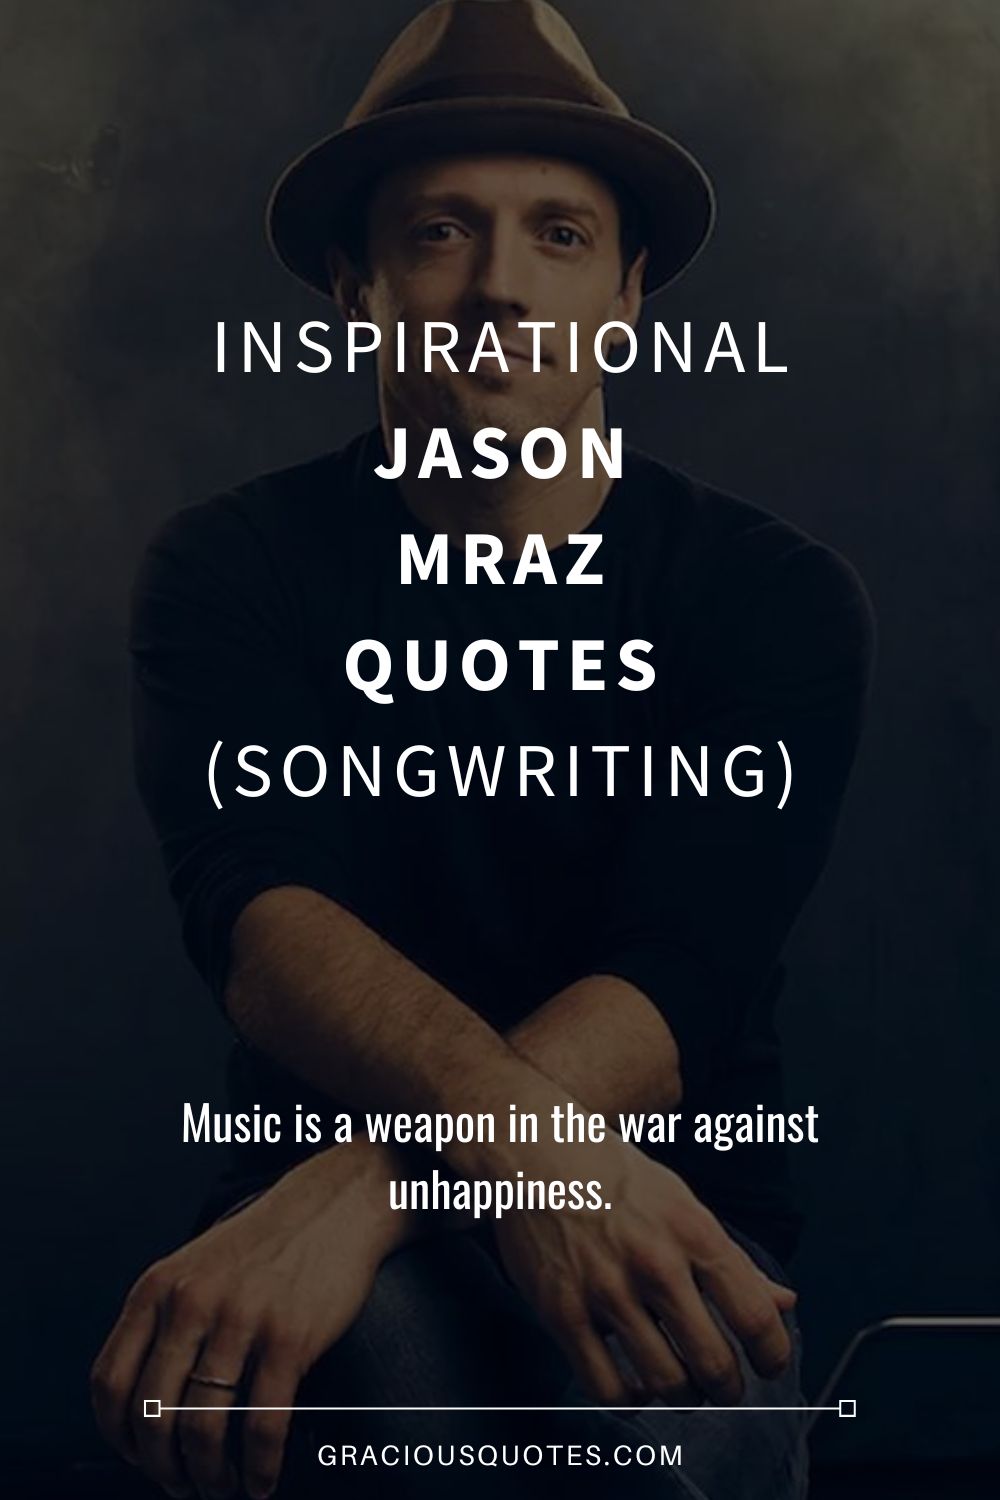 Inspirational Jason Mraz Quotes (SONGWRITING) - Gracious Quotes